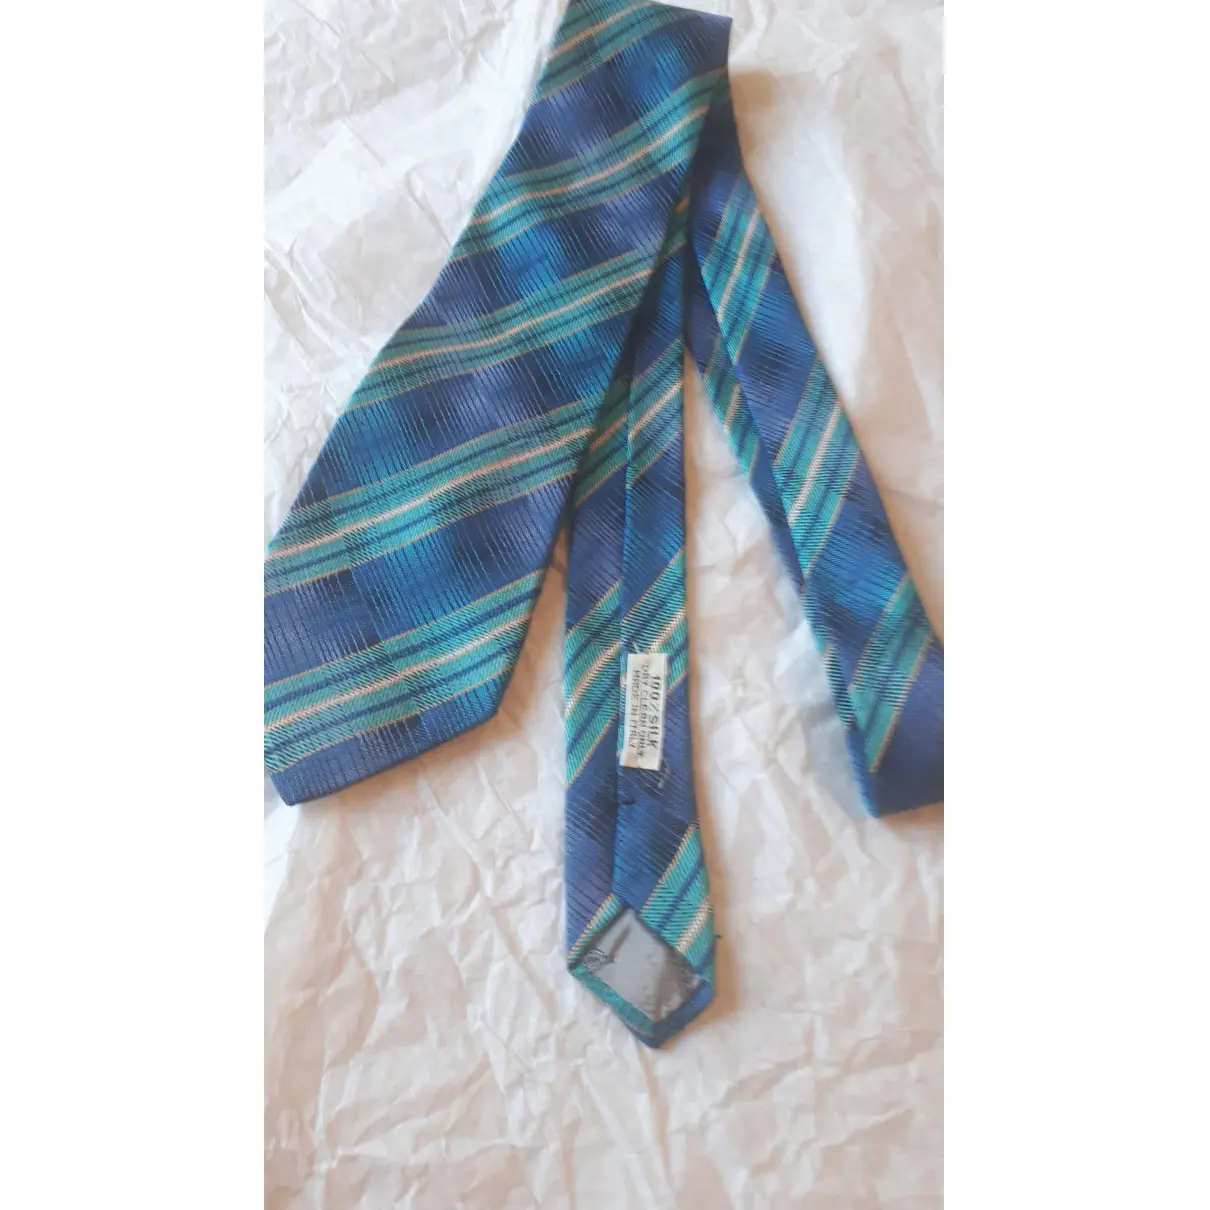 Buy Cacharel Silk tie online - Vintage